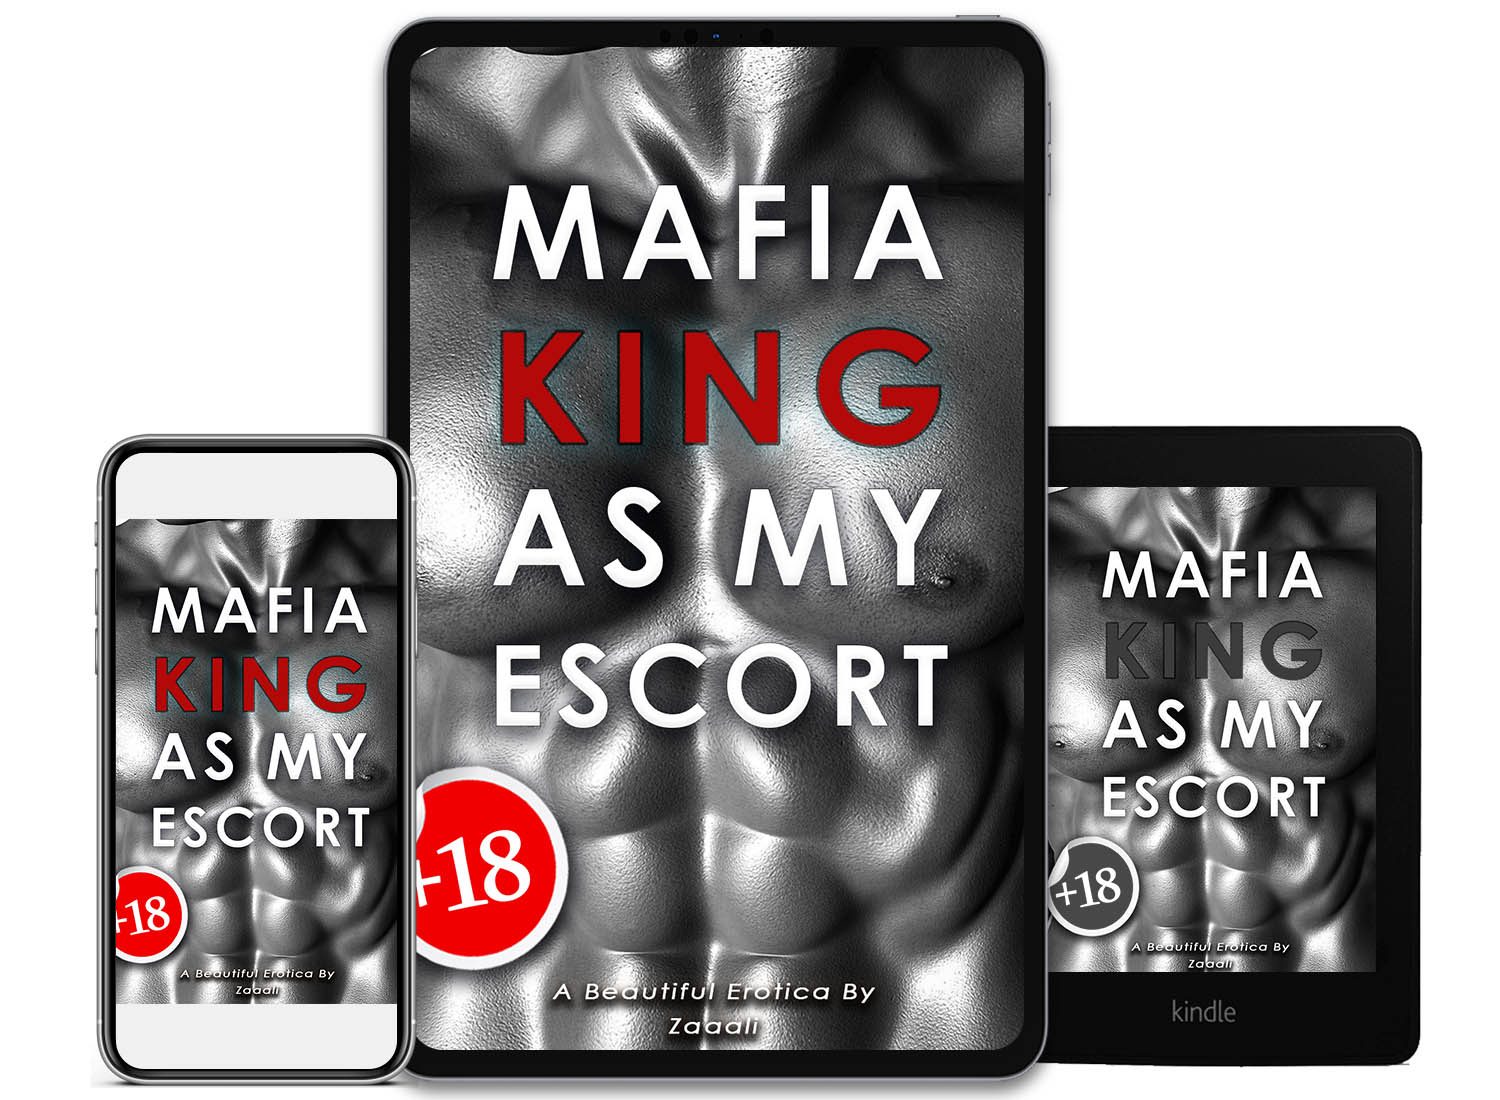 mrismailben-portfolio-mafia-king-as-my-escort-ebookcoverdesign-